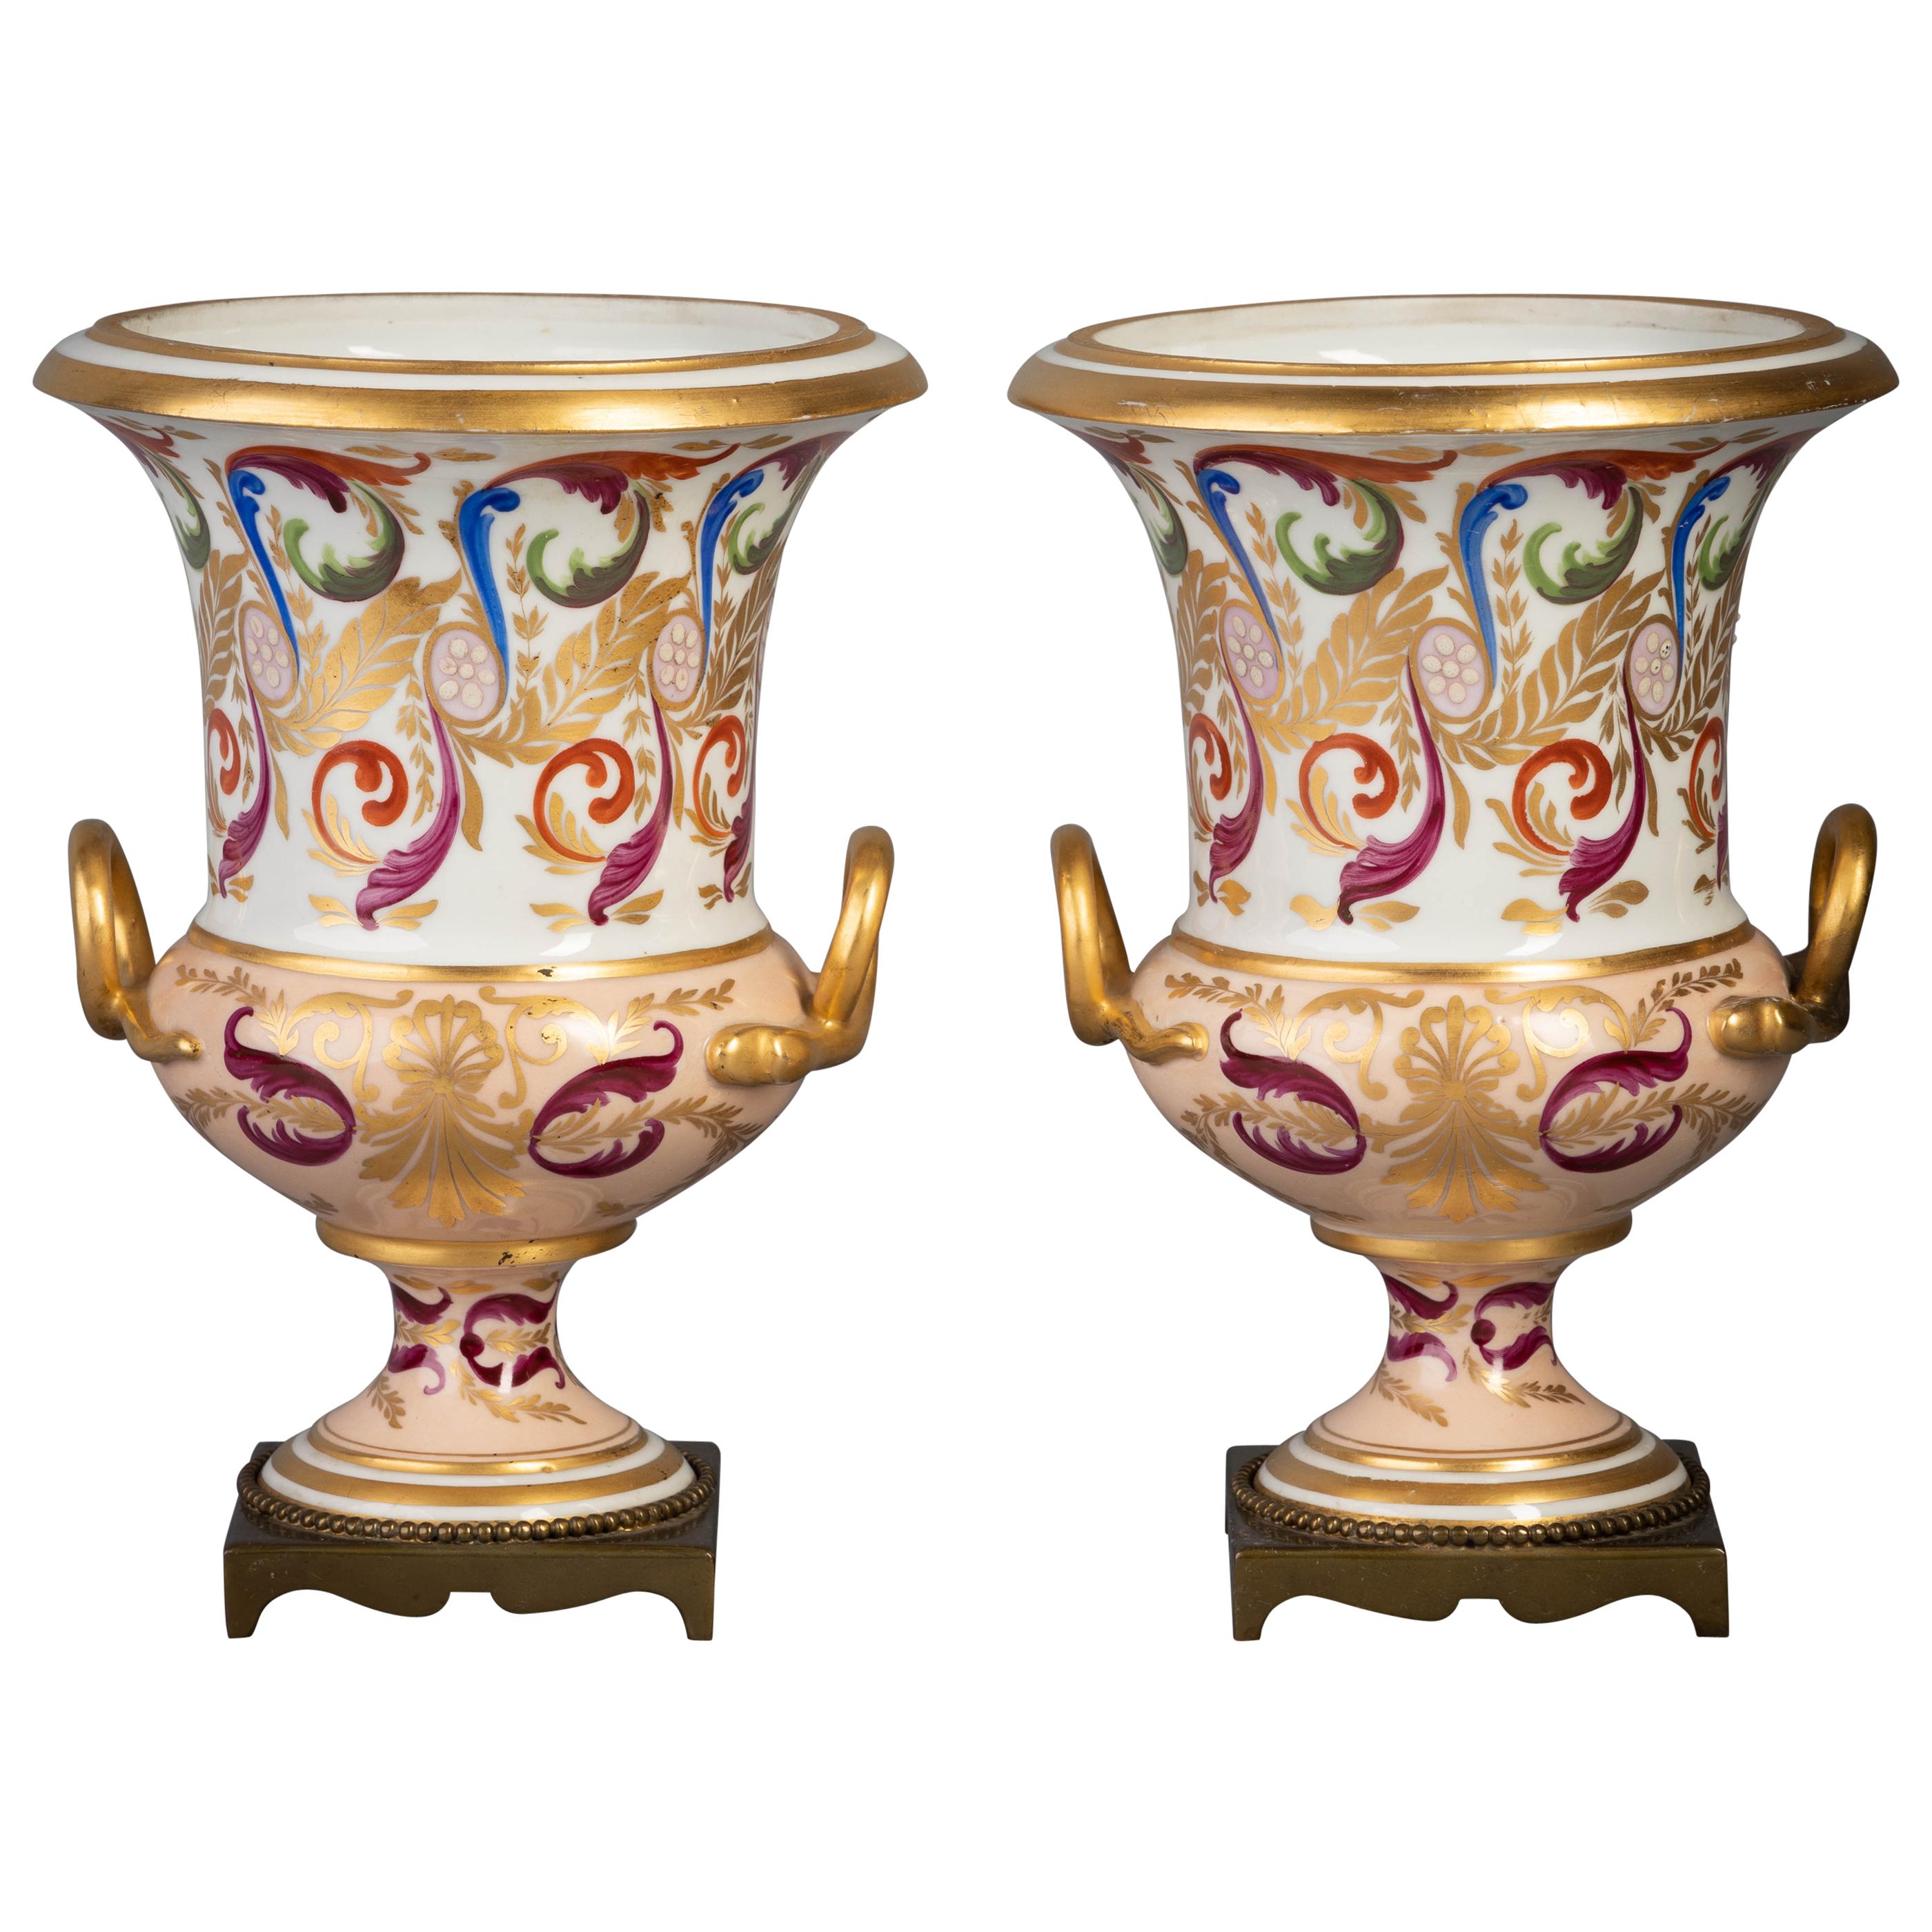 Pair of Paris Porcelain Two Handled Vases, circa 1880